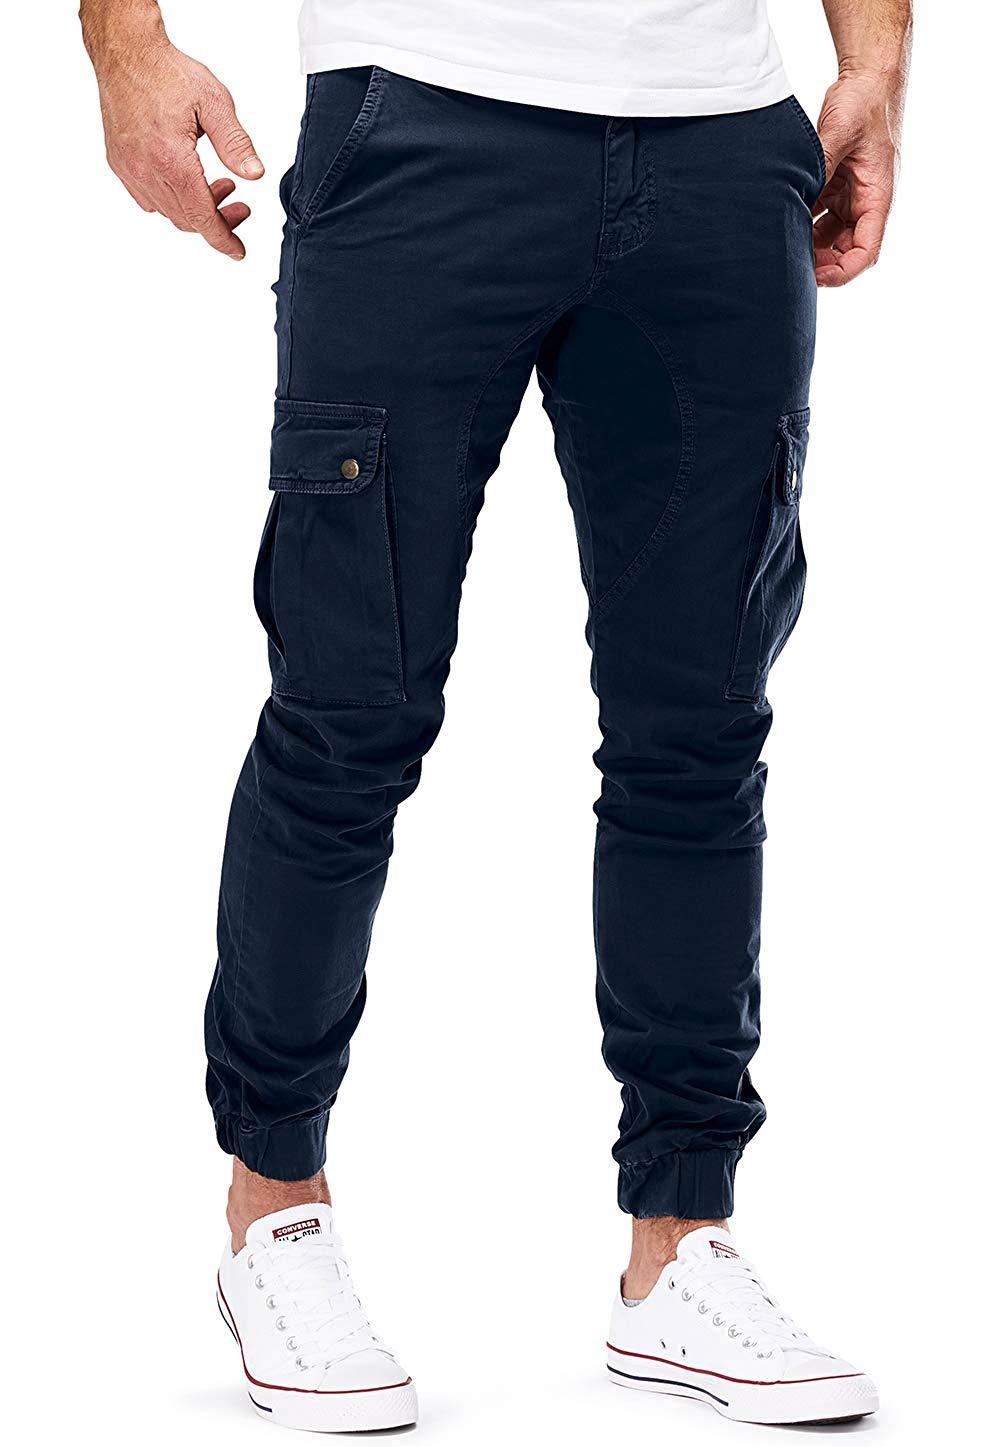 Casual Men Pocket Long Pants-Men Pants-Navy Blue-M-Free Shipping at meselling99